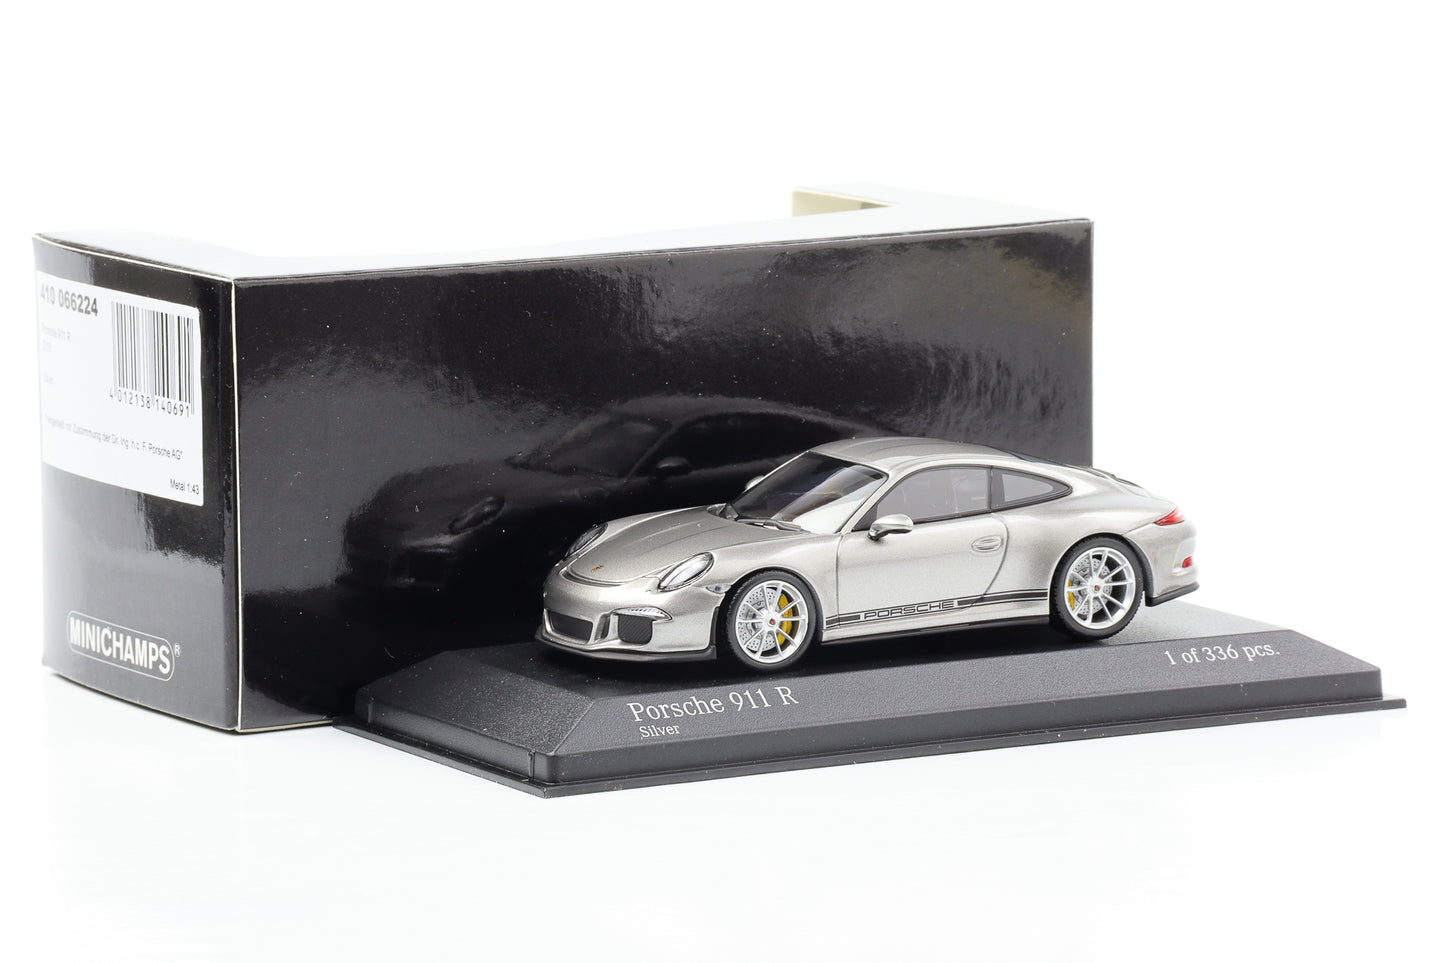 1:43 Porsche 911 991 R silver with black writing Minichamps